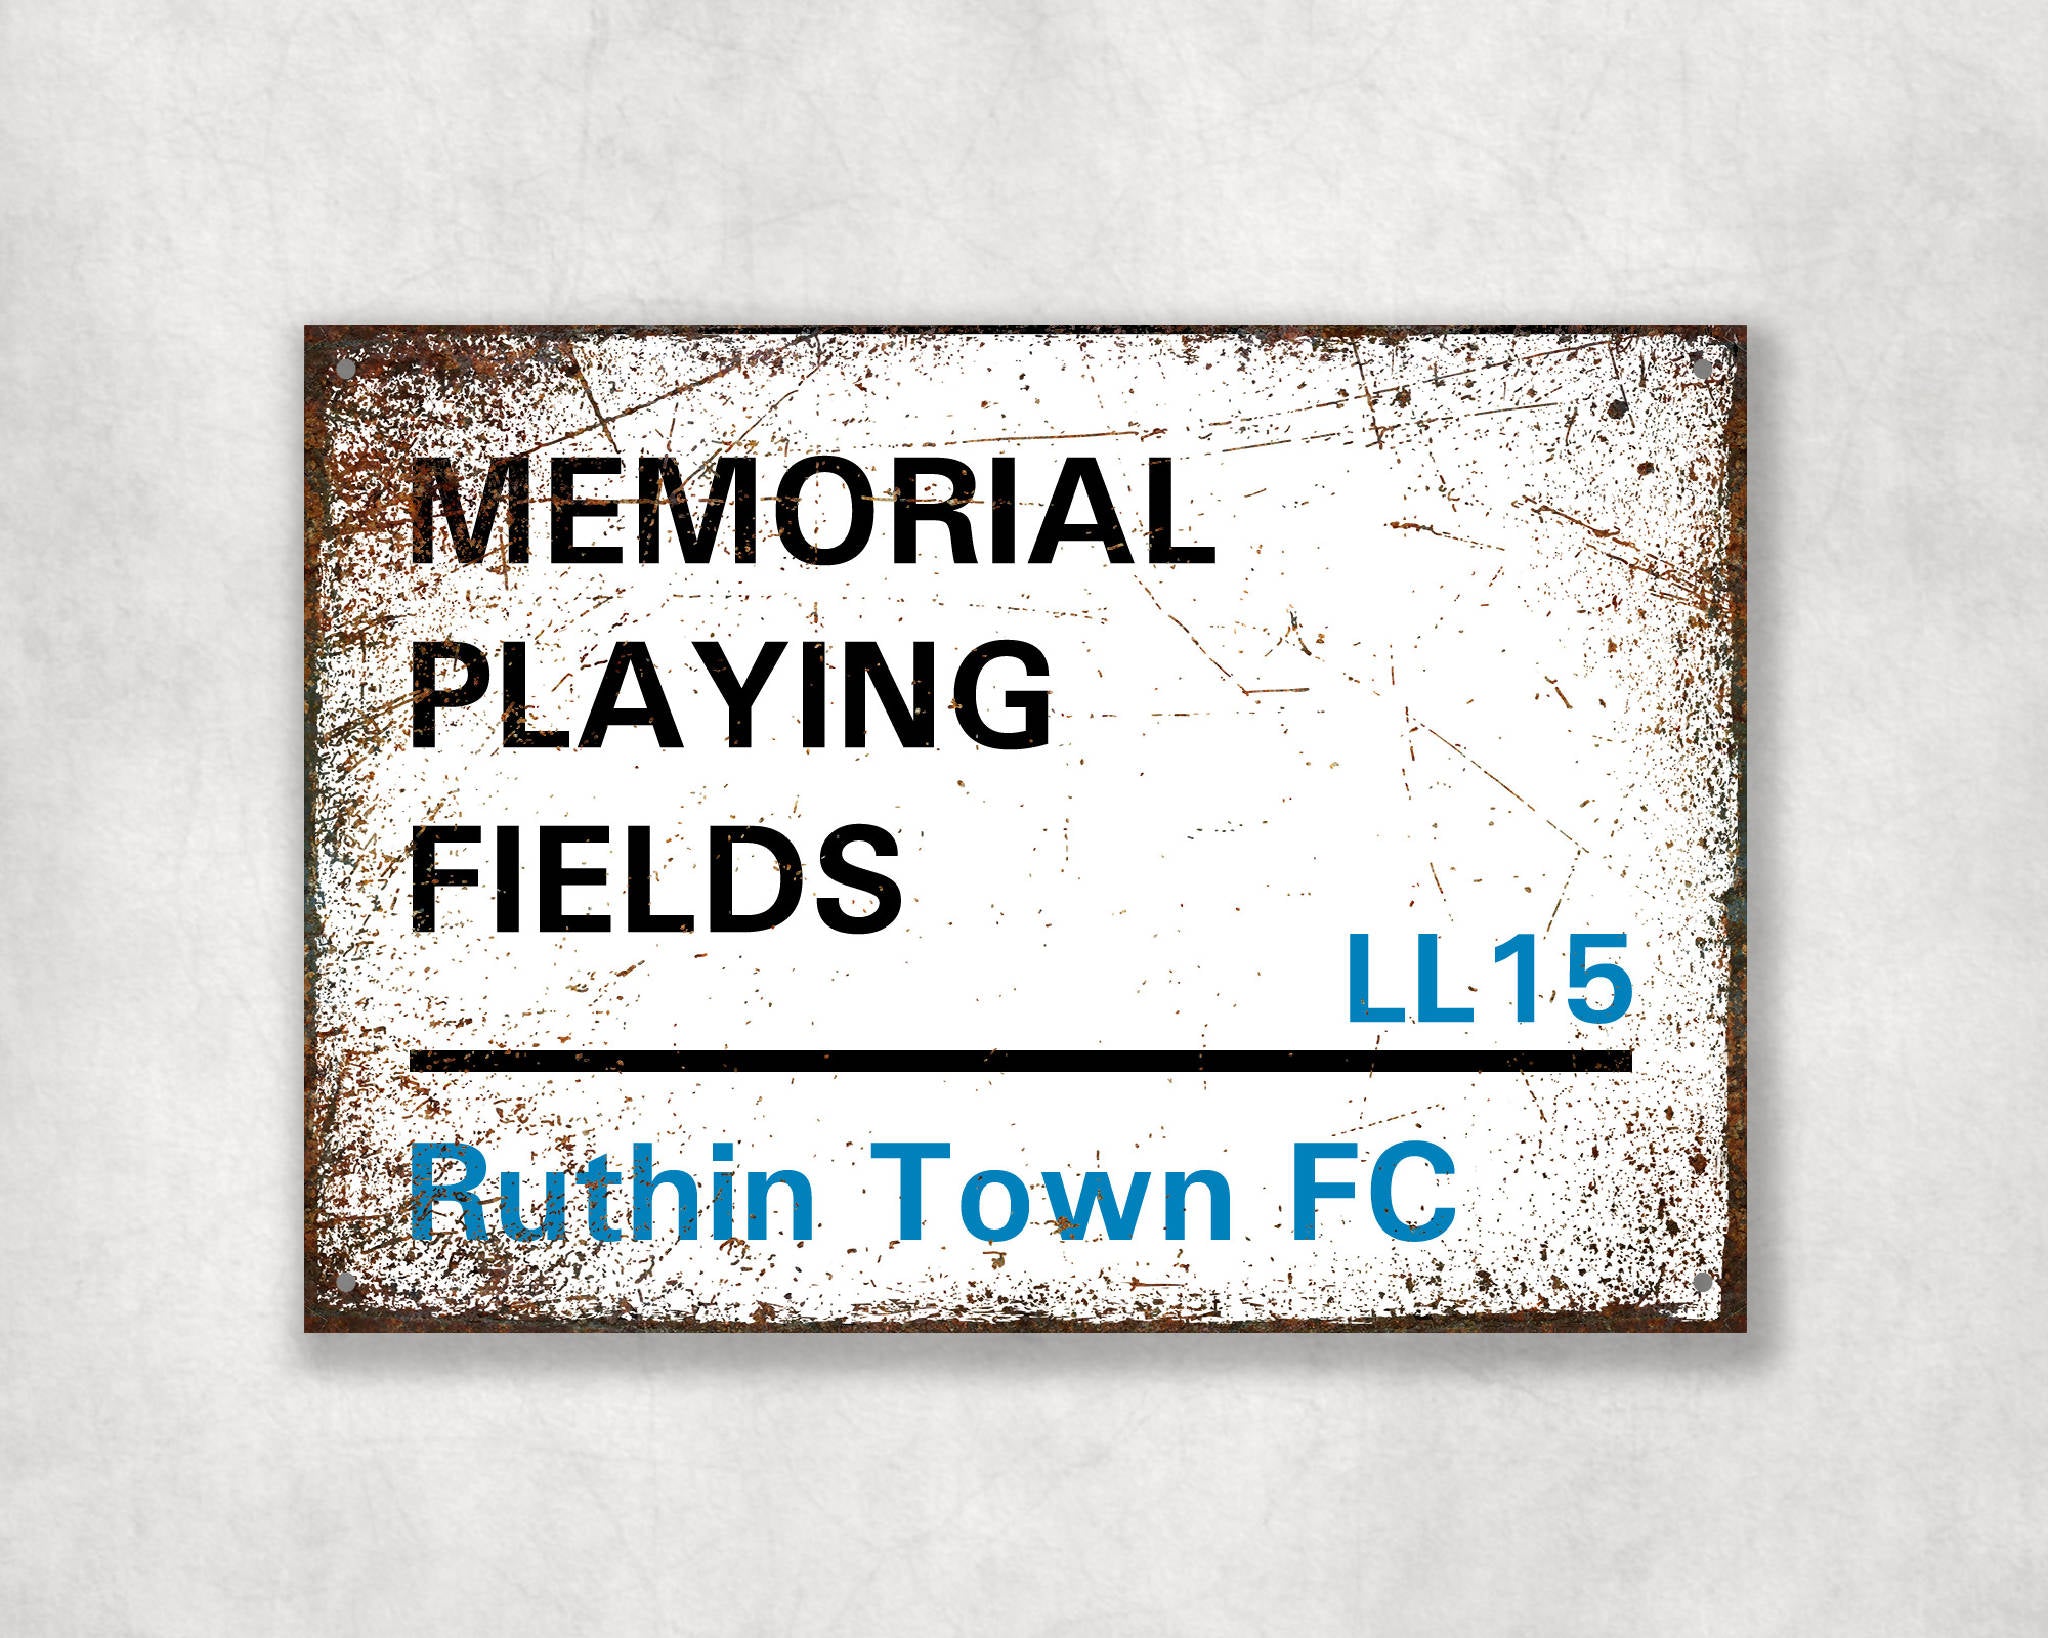 Memorial Playing Fields - Ruthin Town FC aluminium printed metal street sign - gift, keepsake, football gift